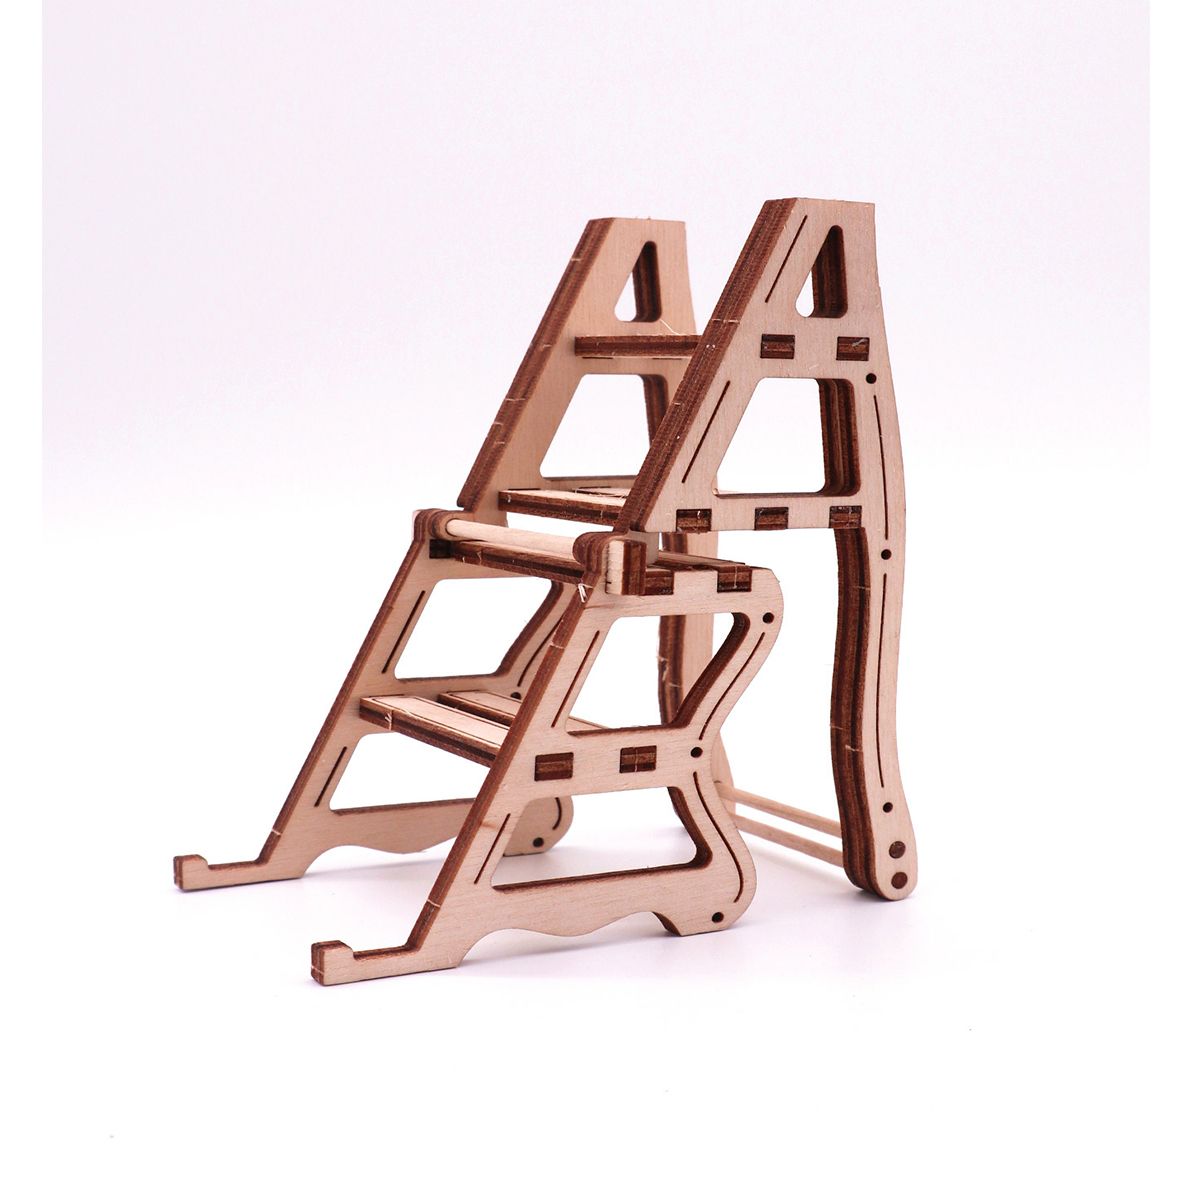 Self-Assembly-Wooden-Chair-Birch-Phone-Shelf-Holder-Model-Gift-Children-Science-Model-Building-Kits-1456822